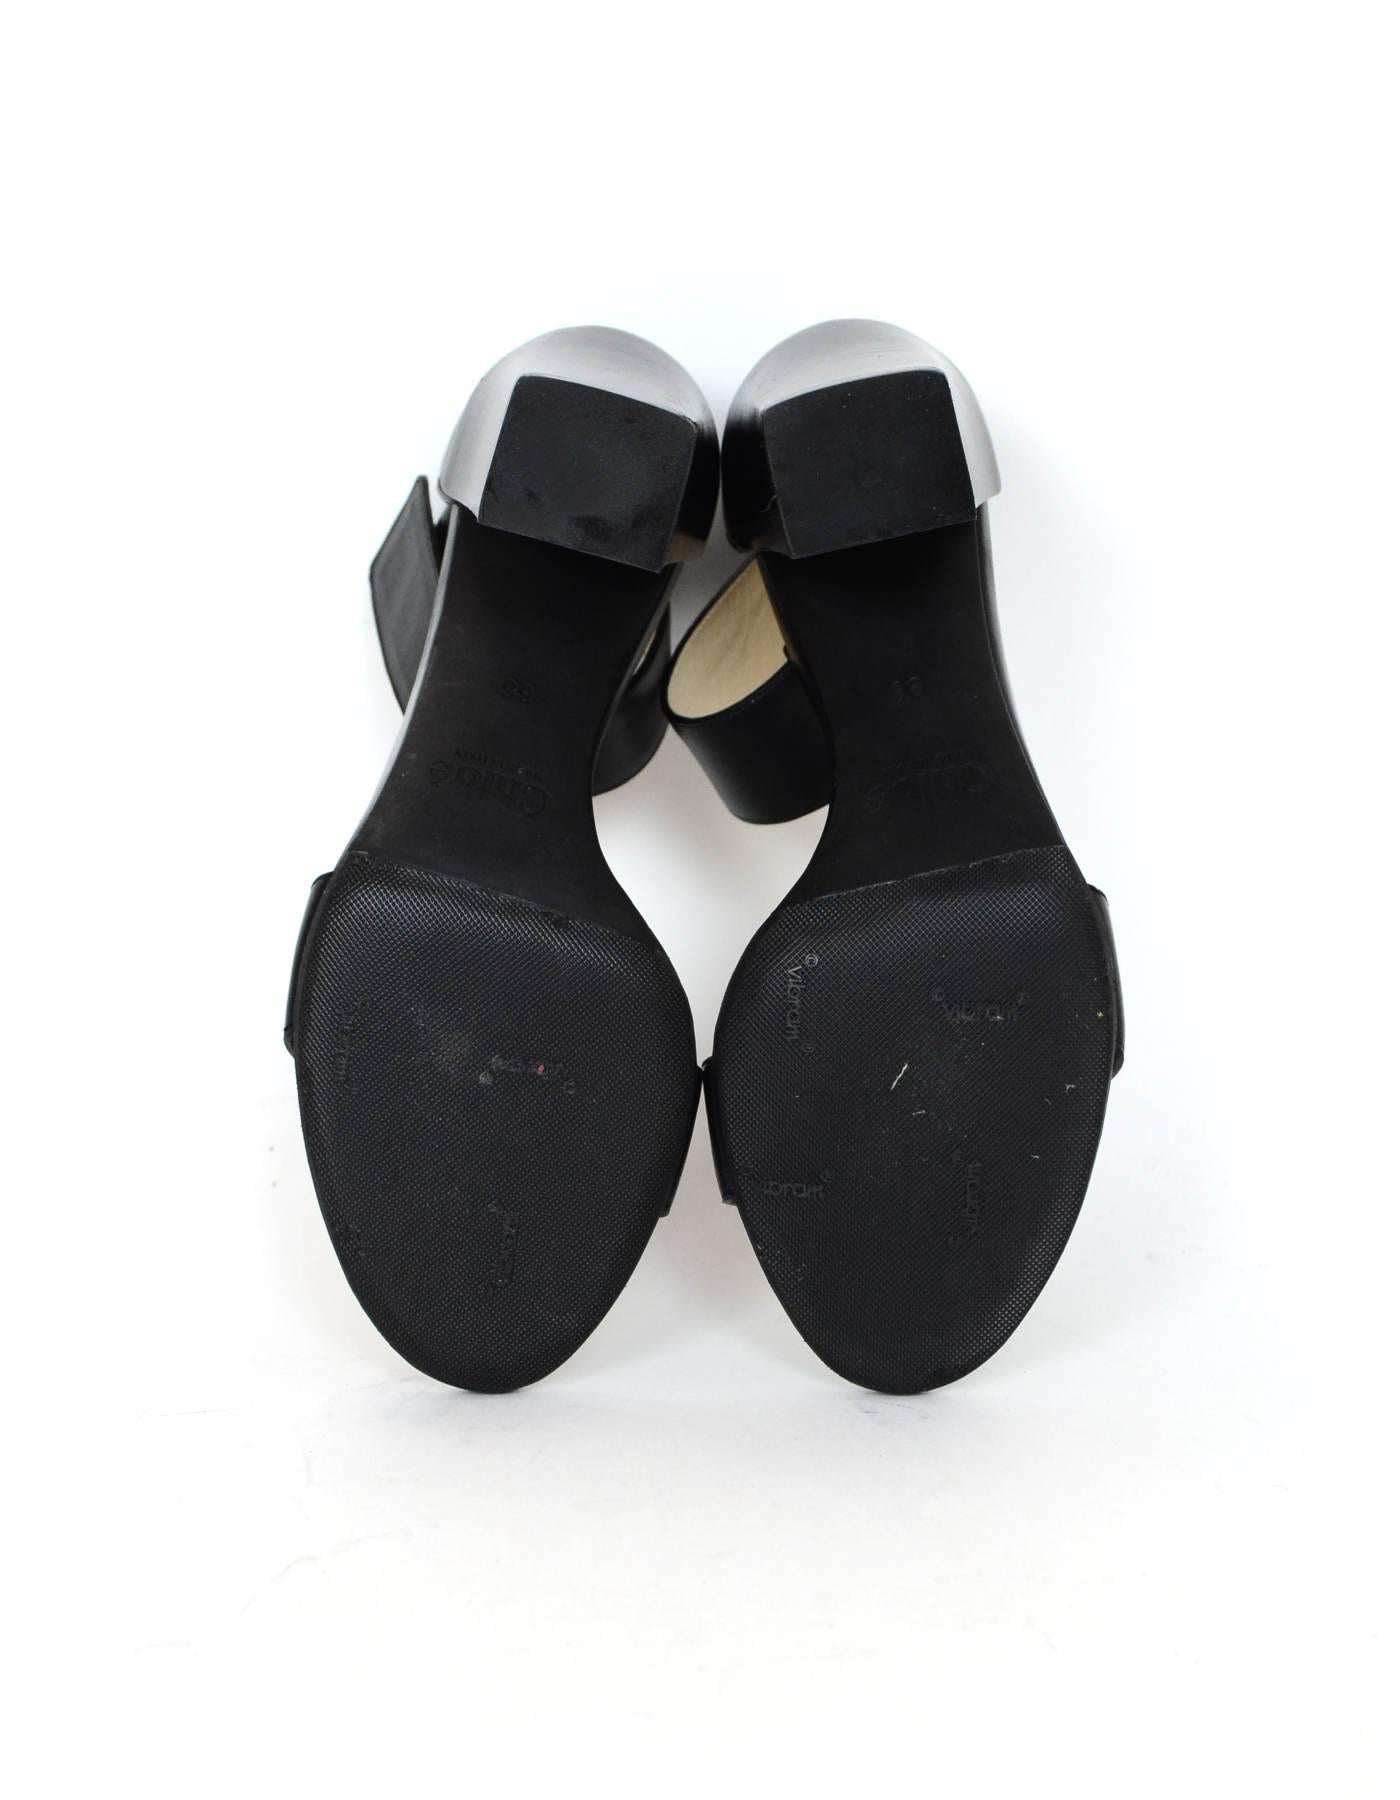 Chloe Black Leather Sandals Sz 36 1